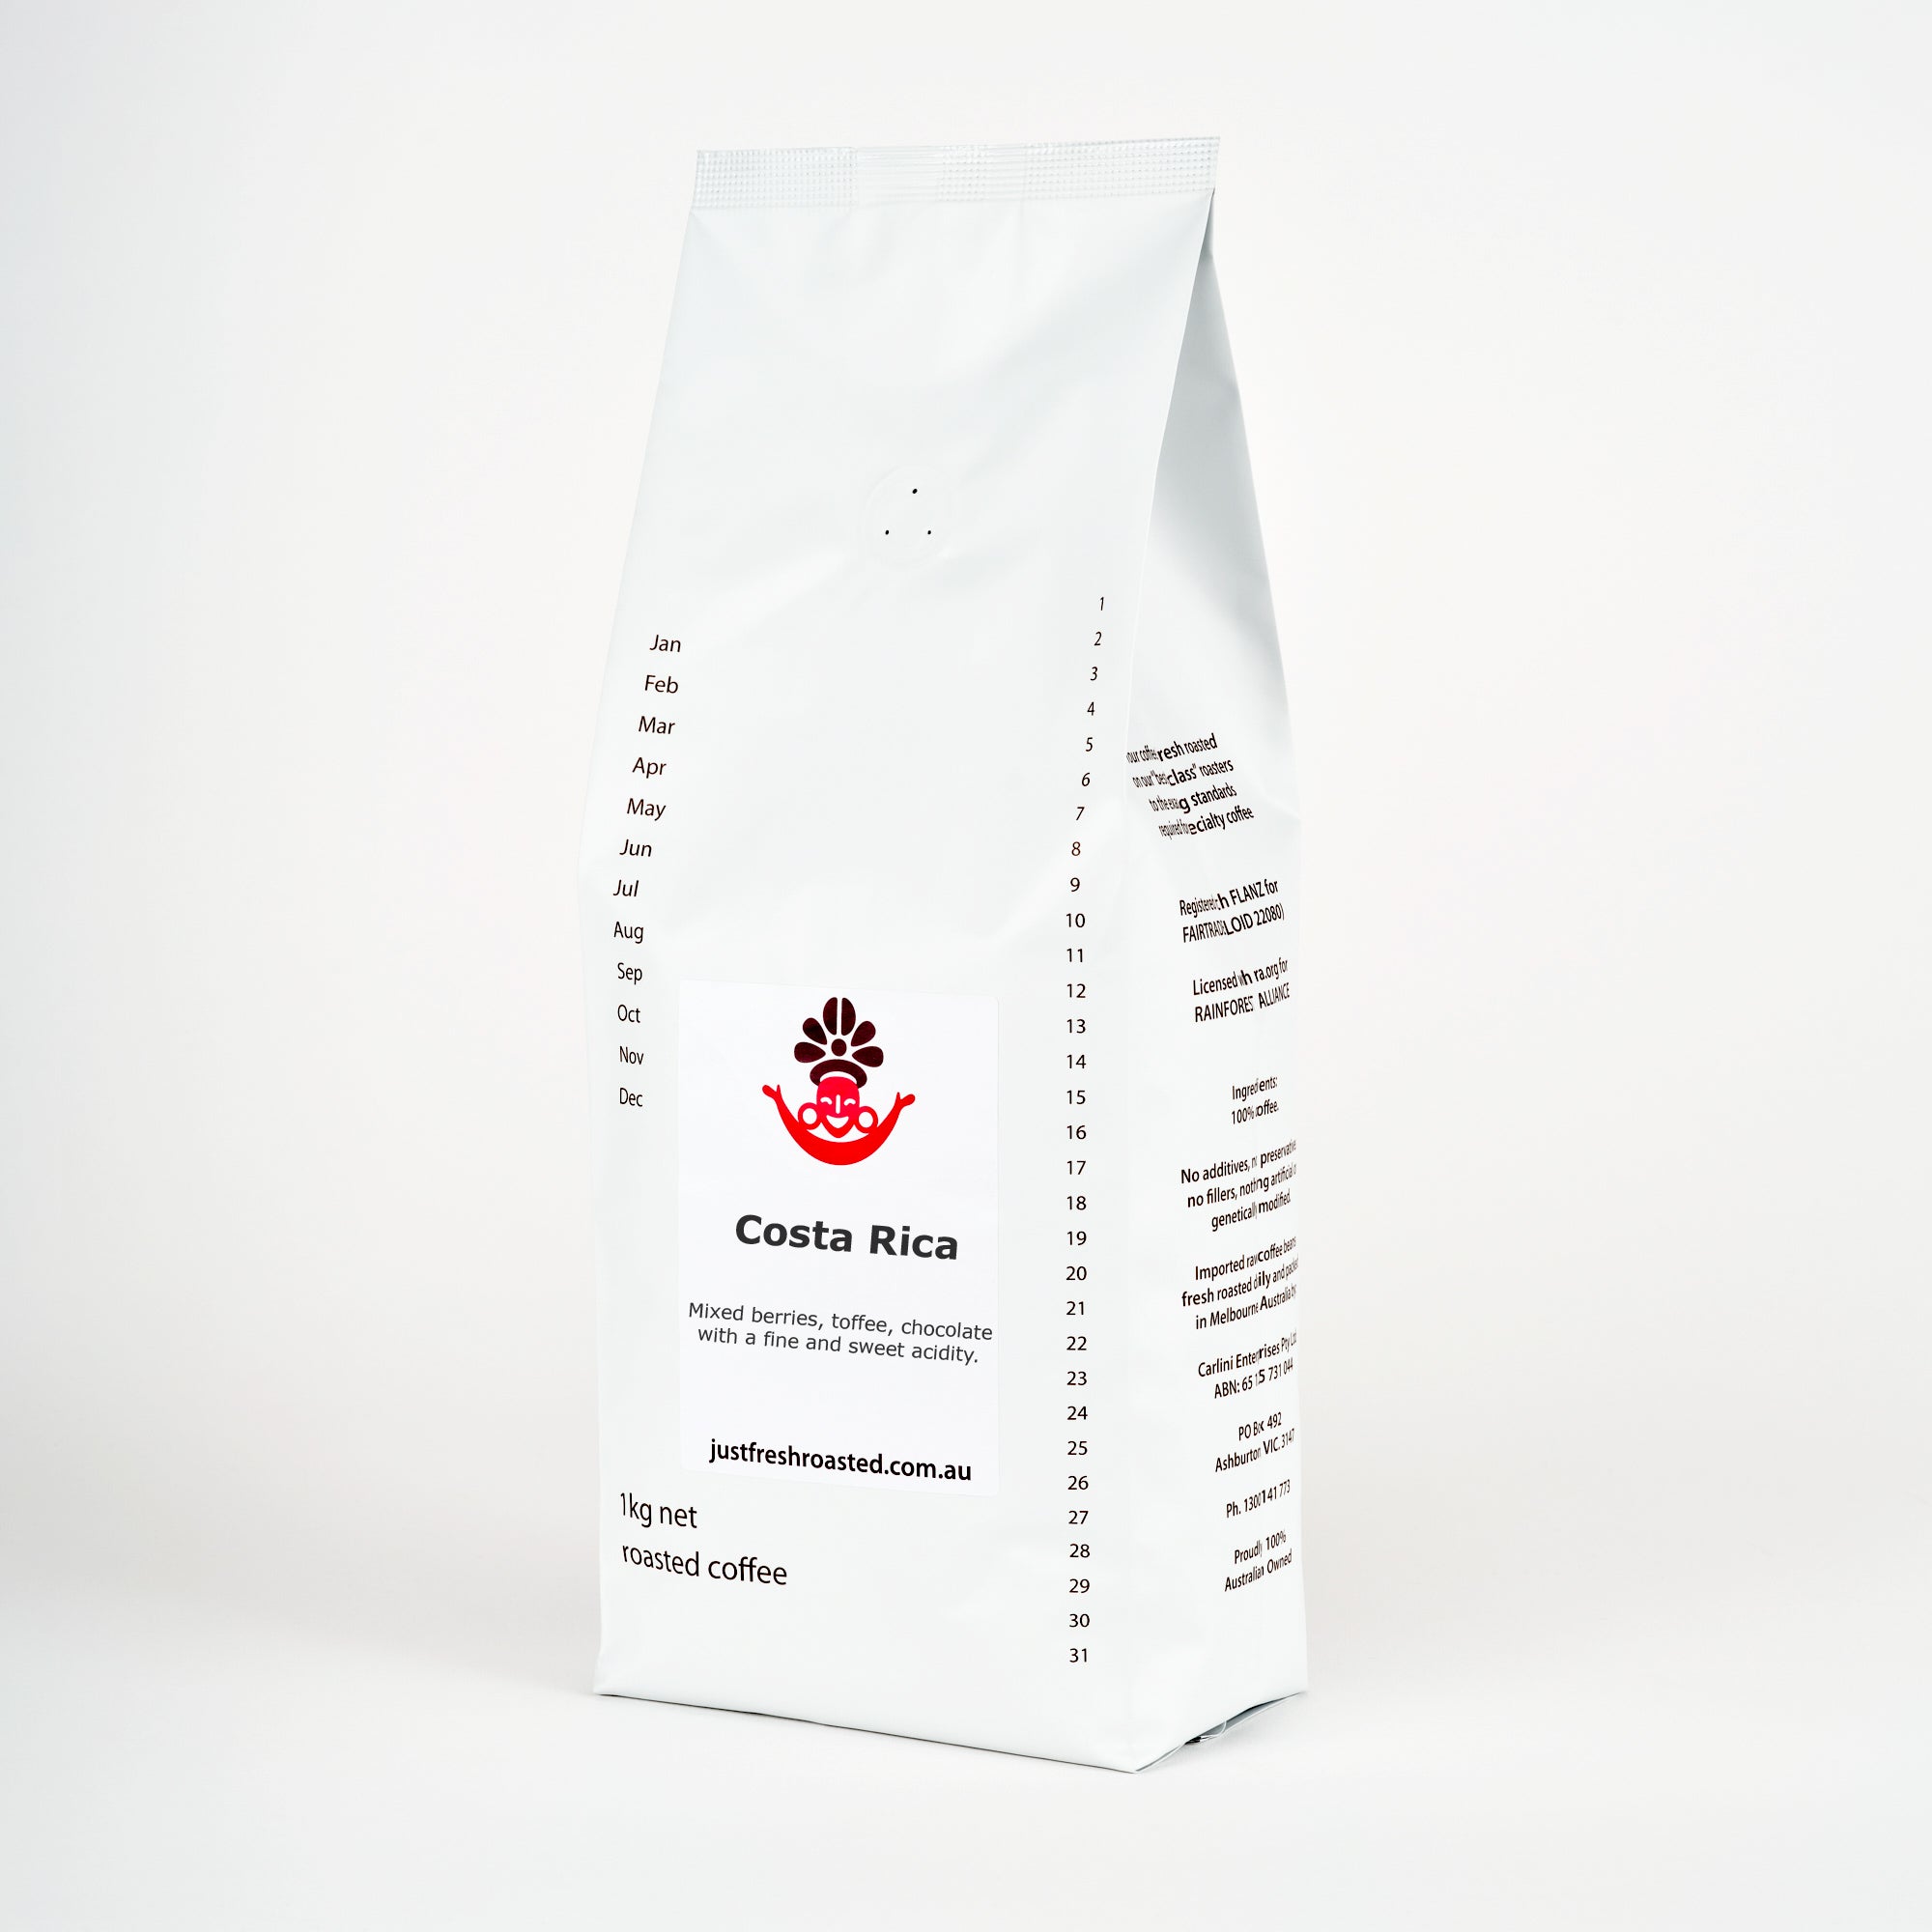 1kg bag of premium quality single origin Costa Rica roasted coffee